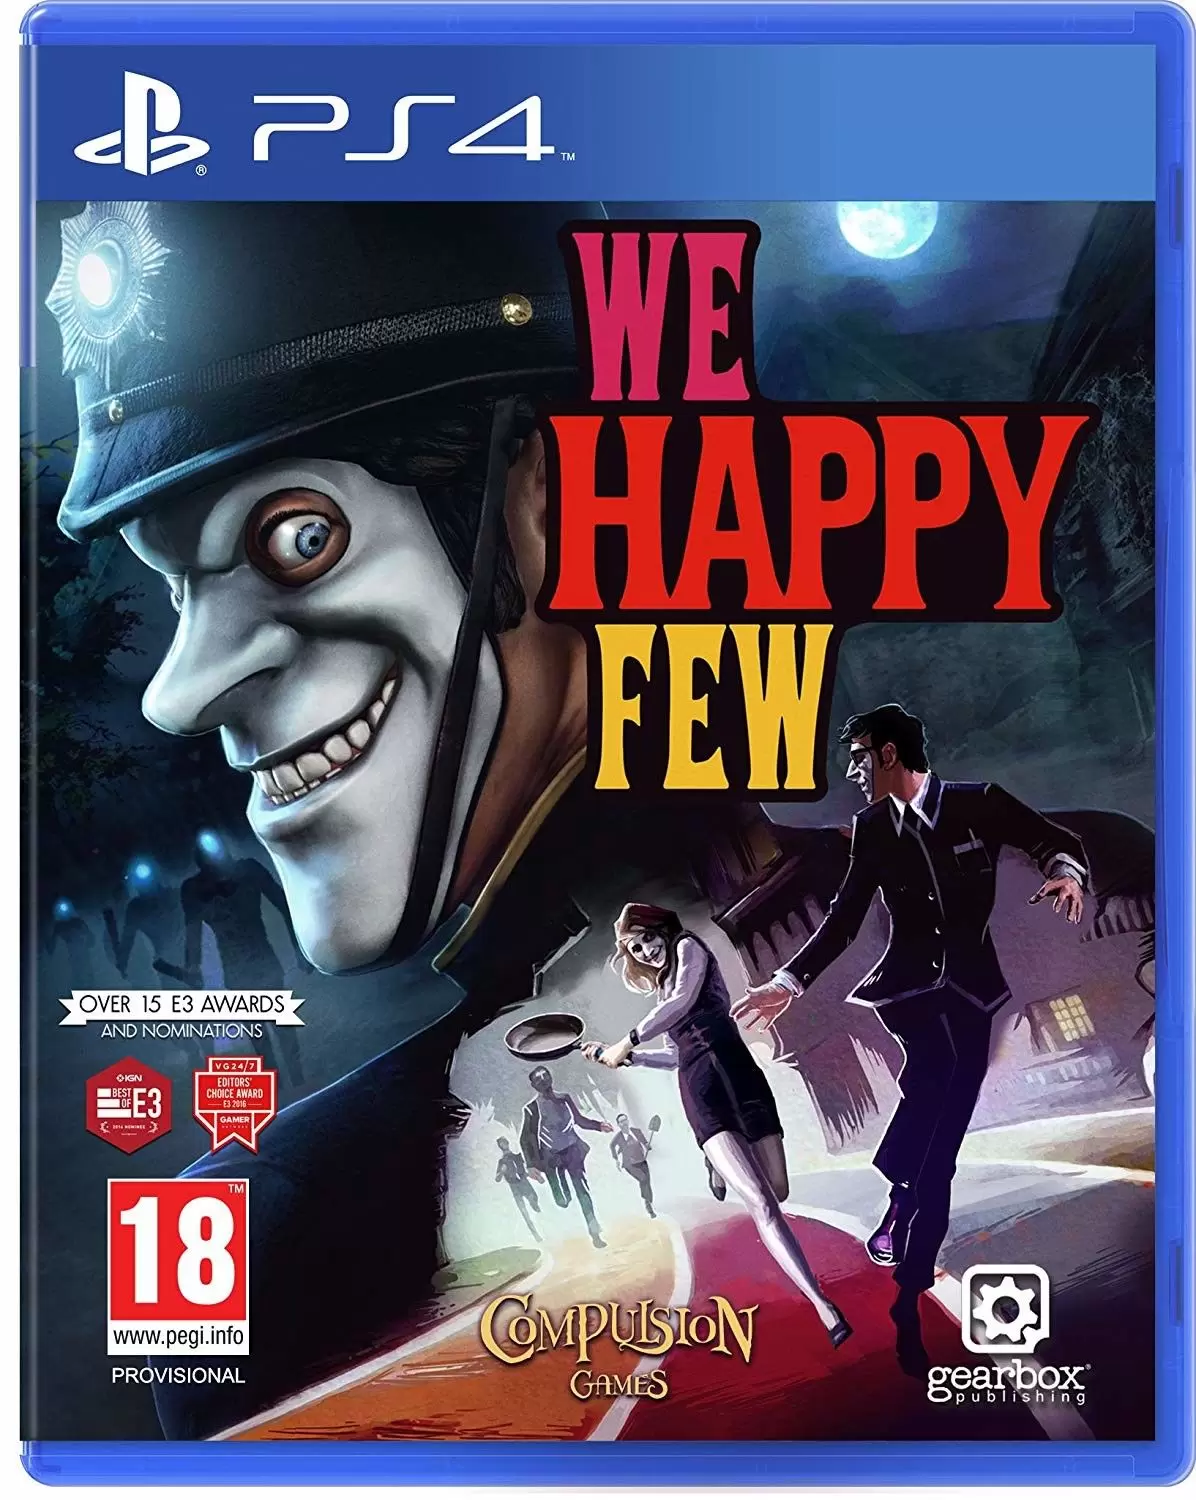 PS4 Games - We Happy Few